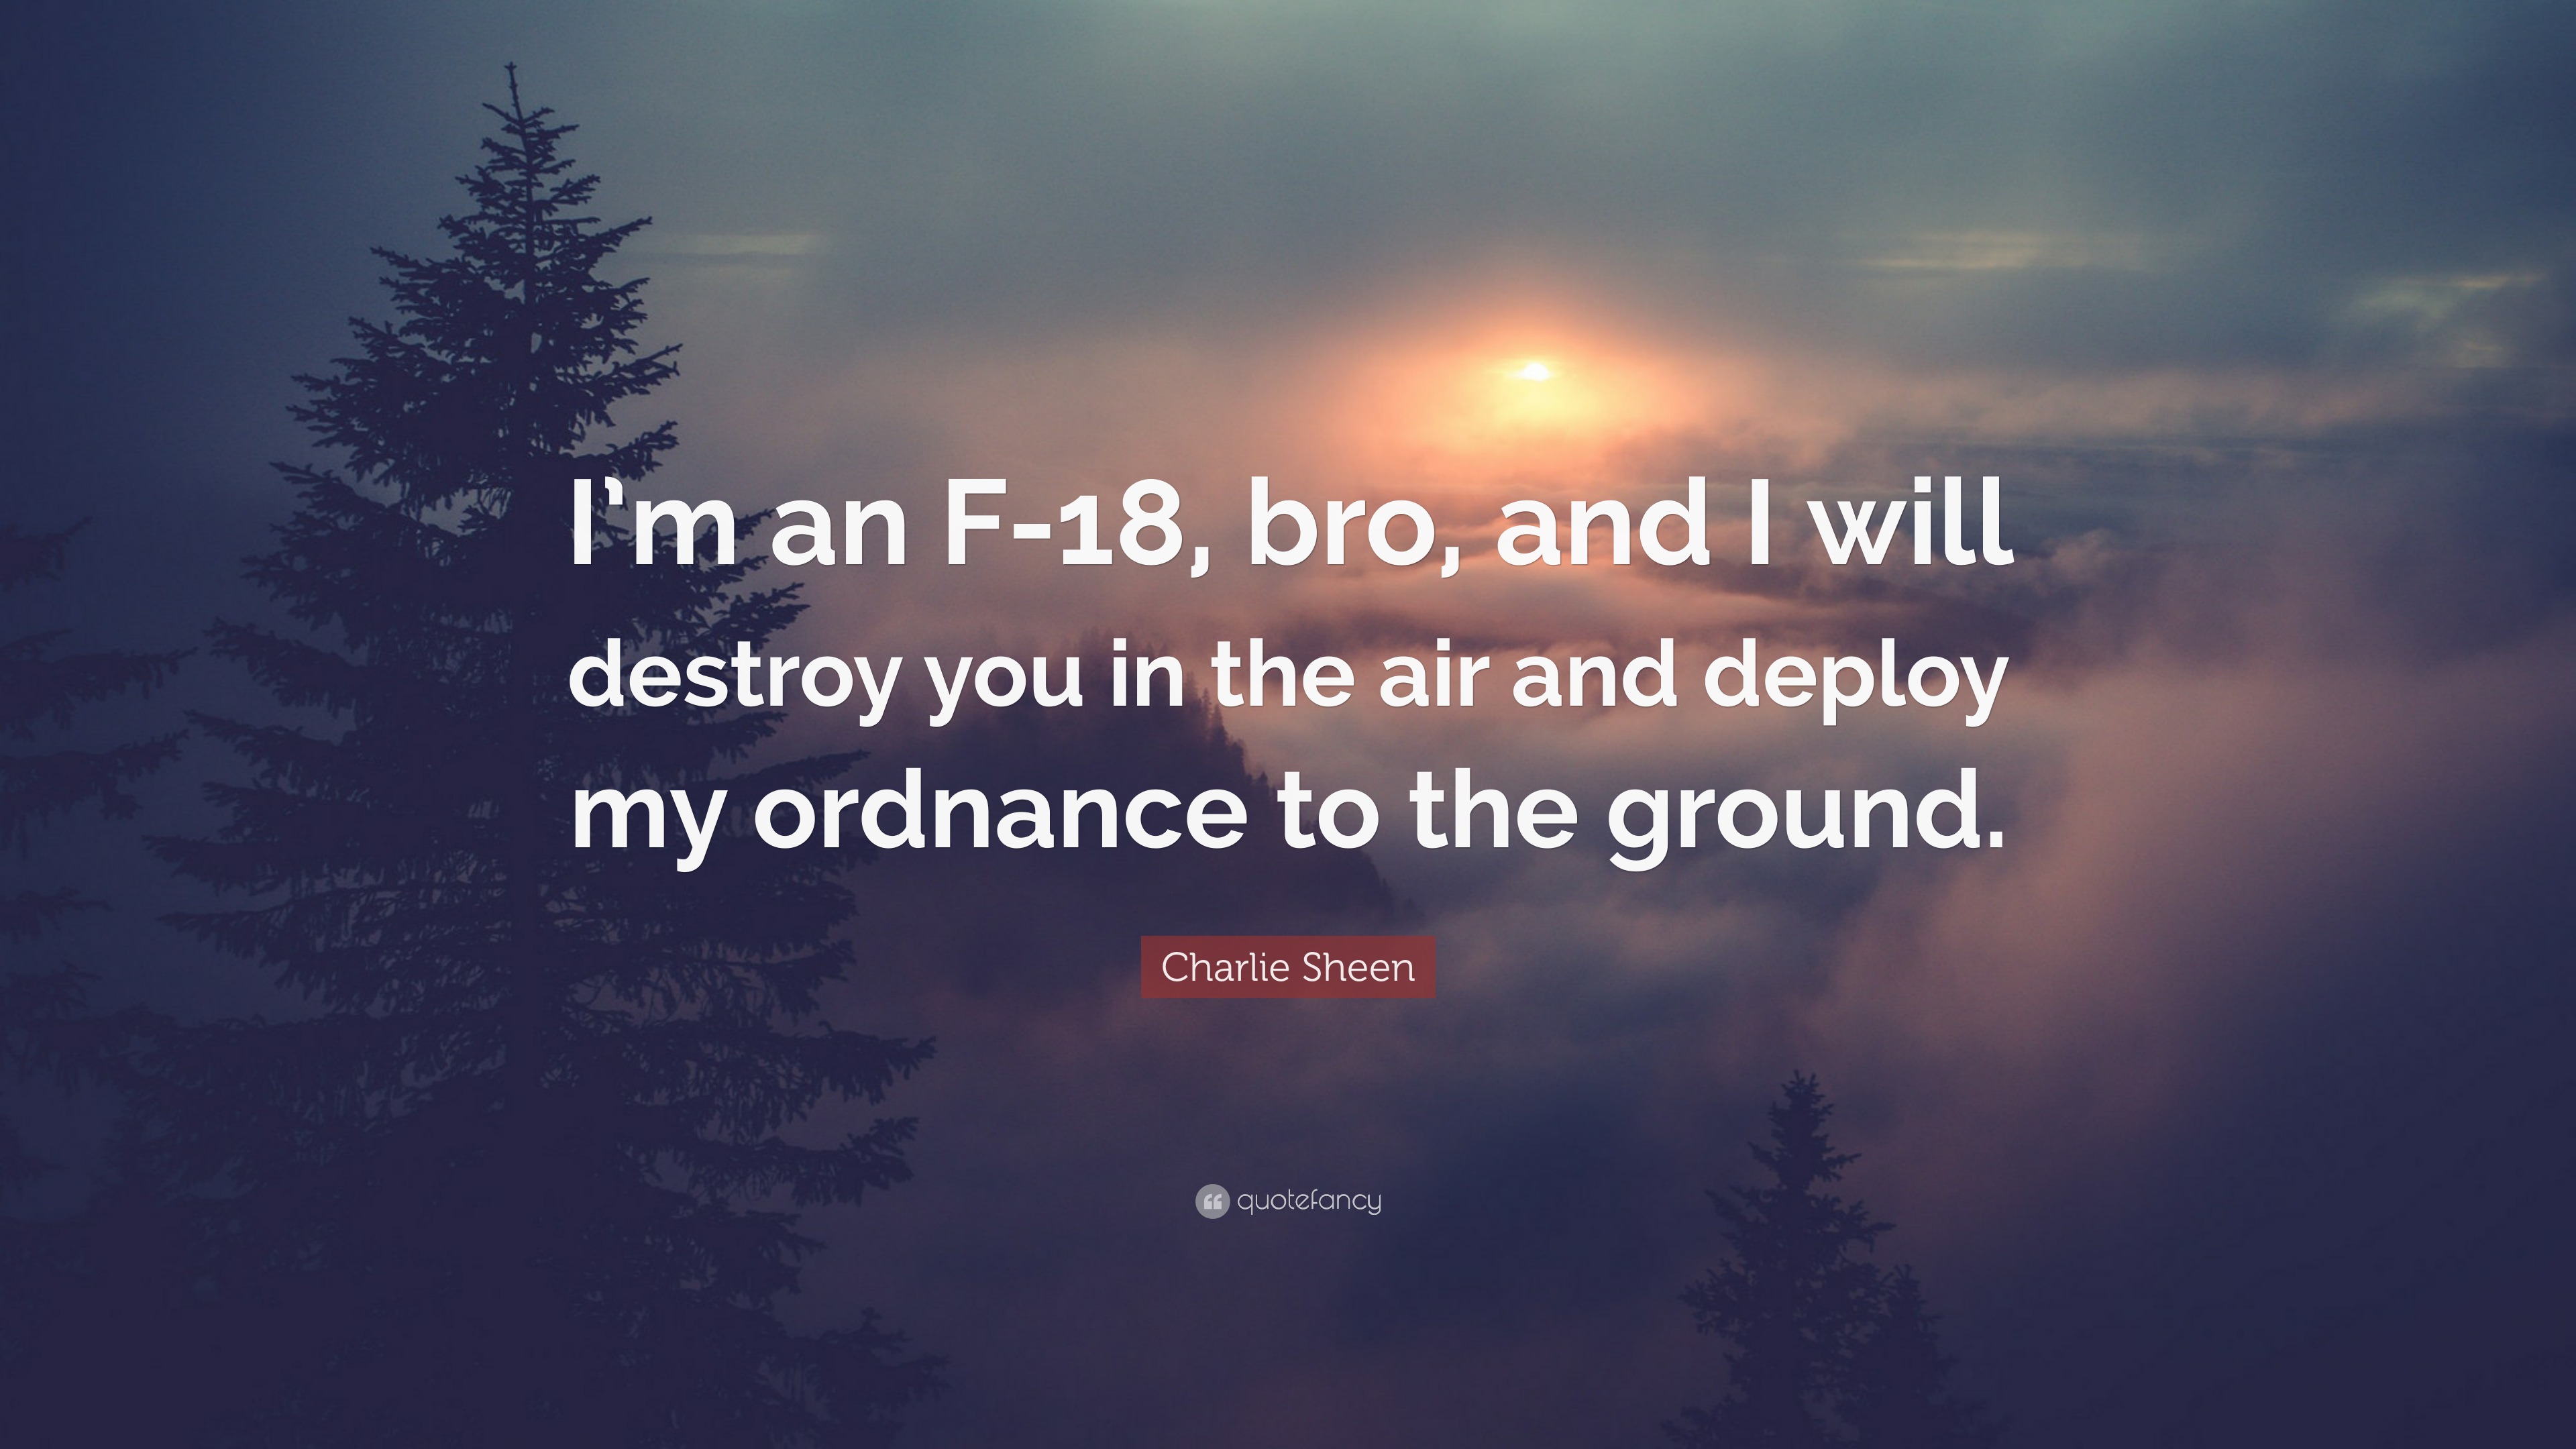 U.S. Air Force on X: We train like we fight. #AirForce #Quote #QOTD   / X